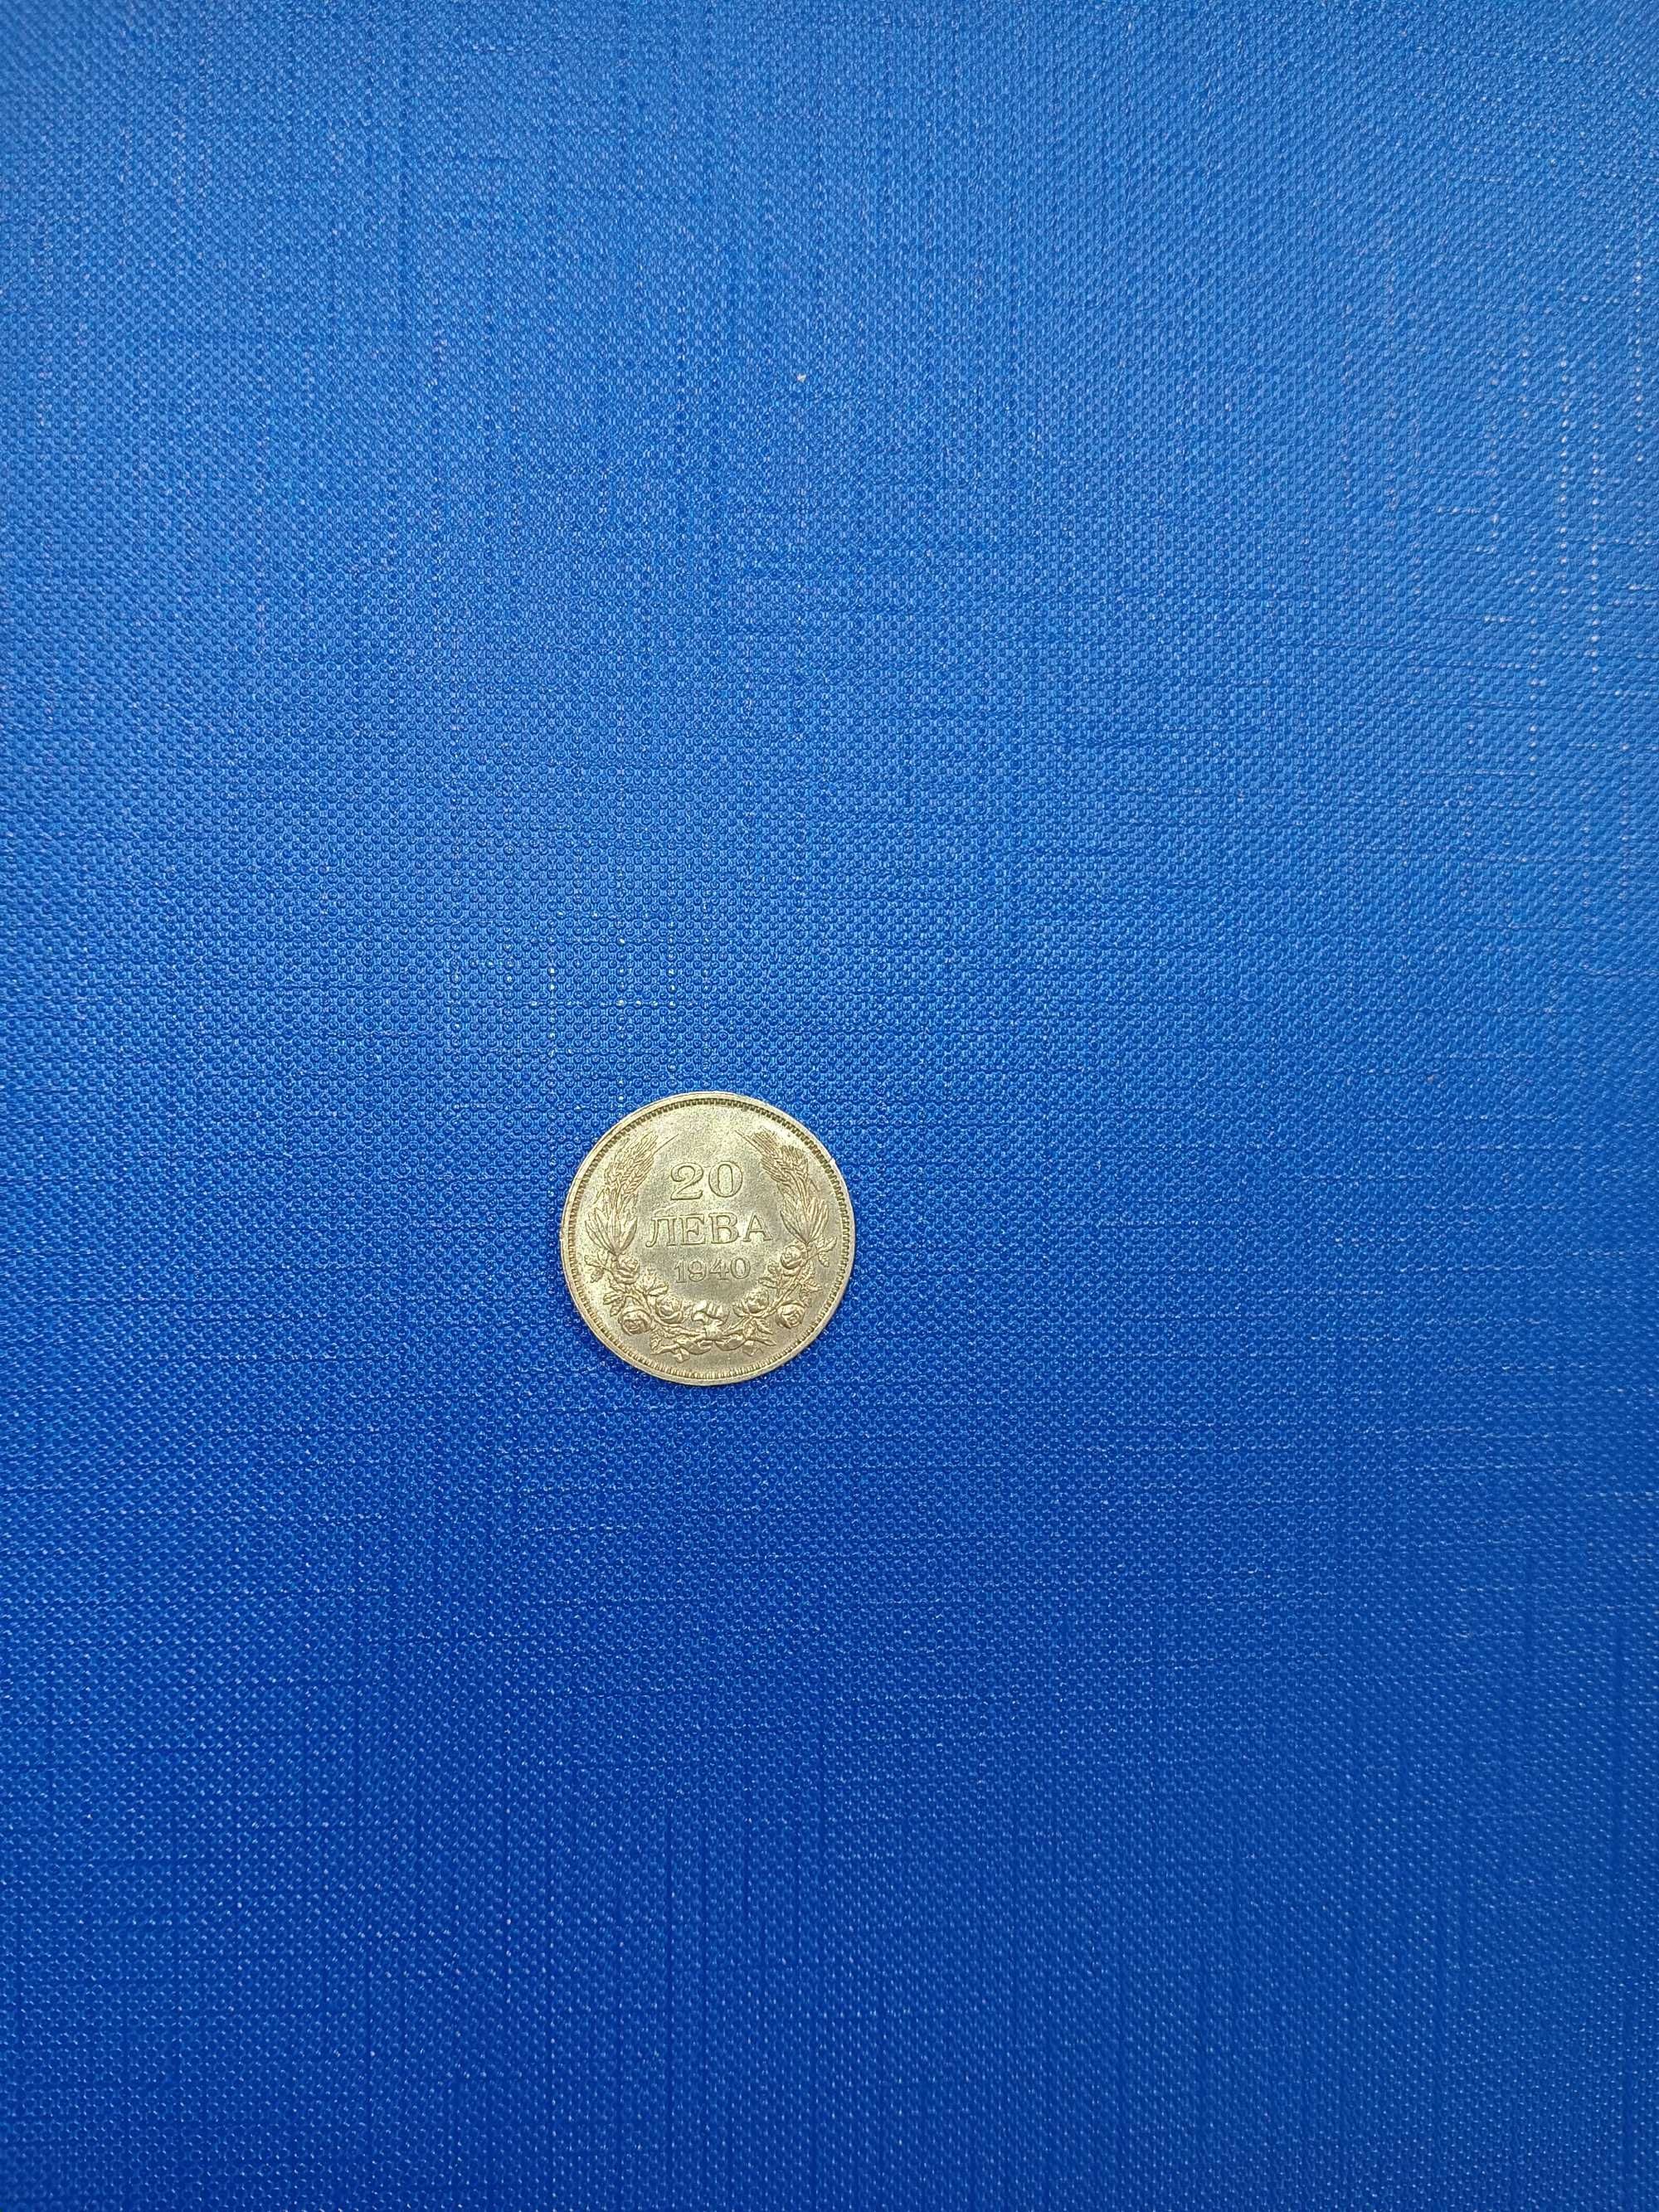 Монета 20 лева 1940 година